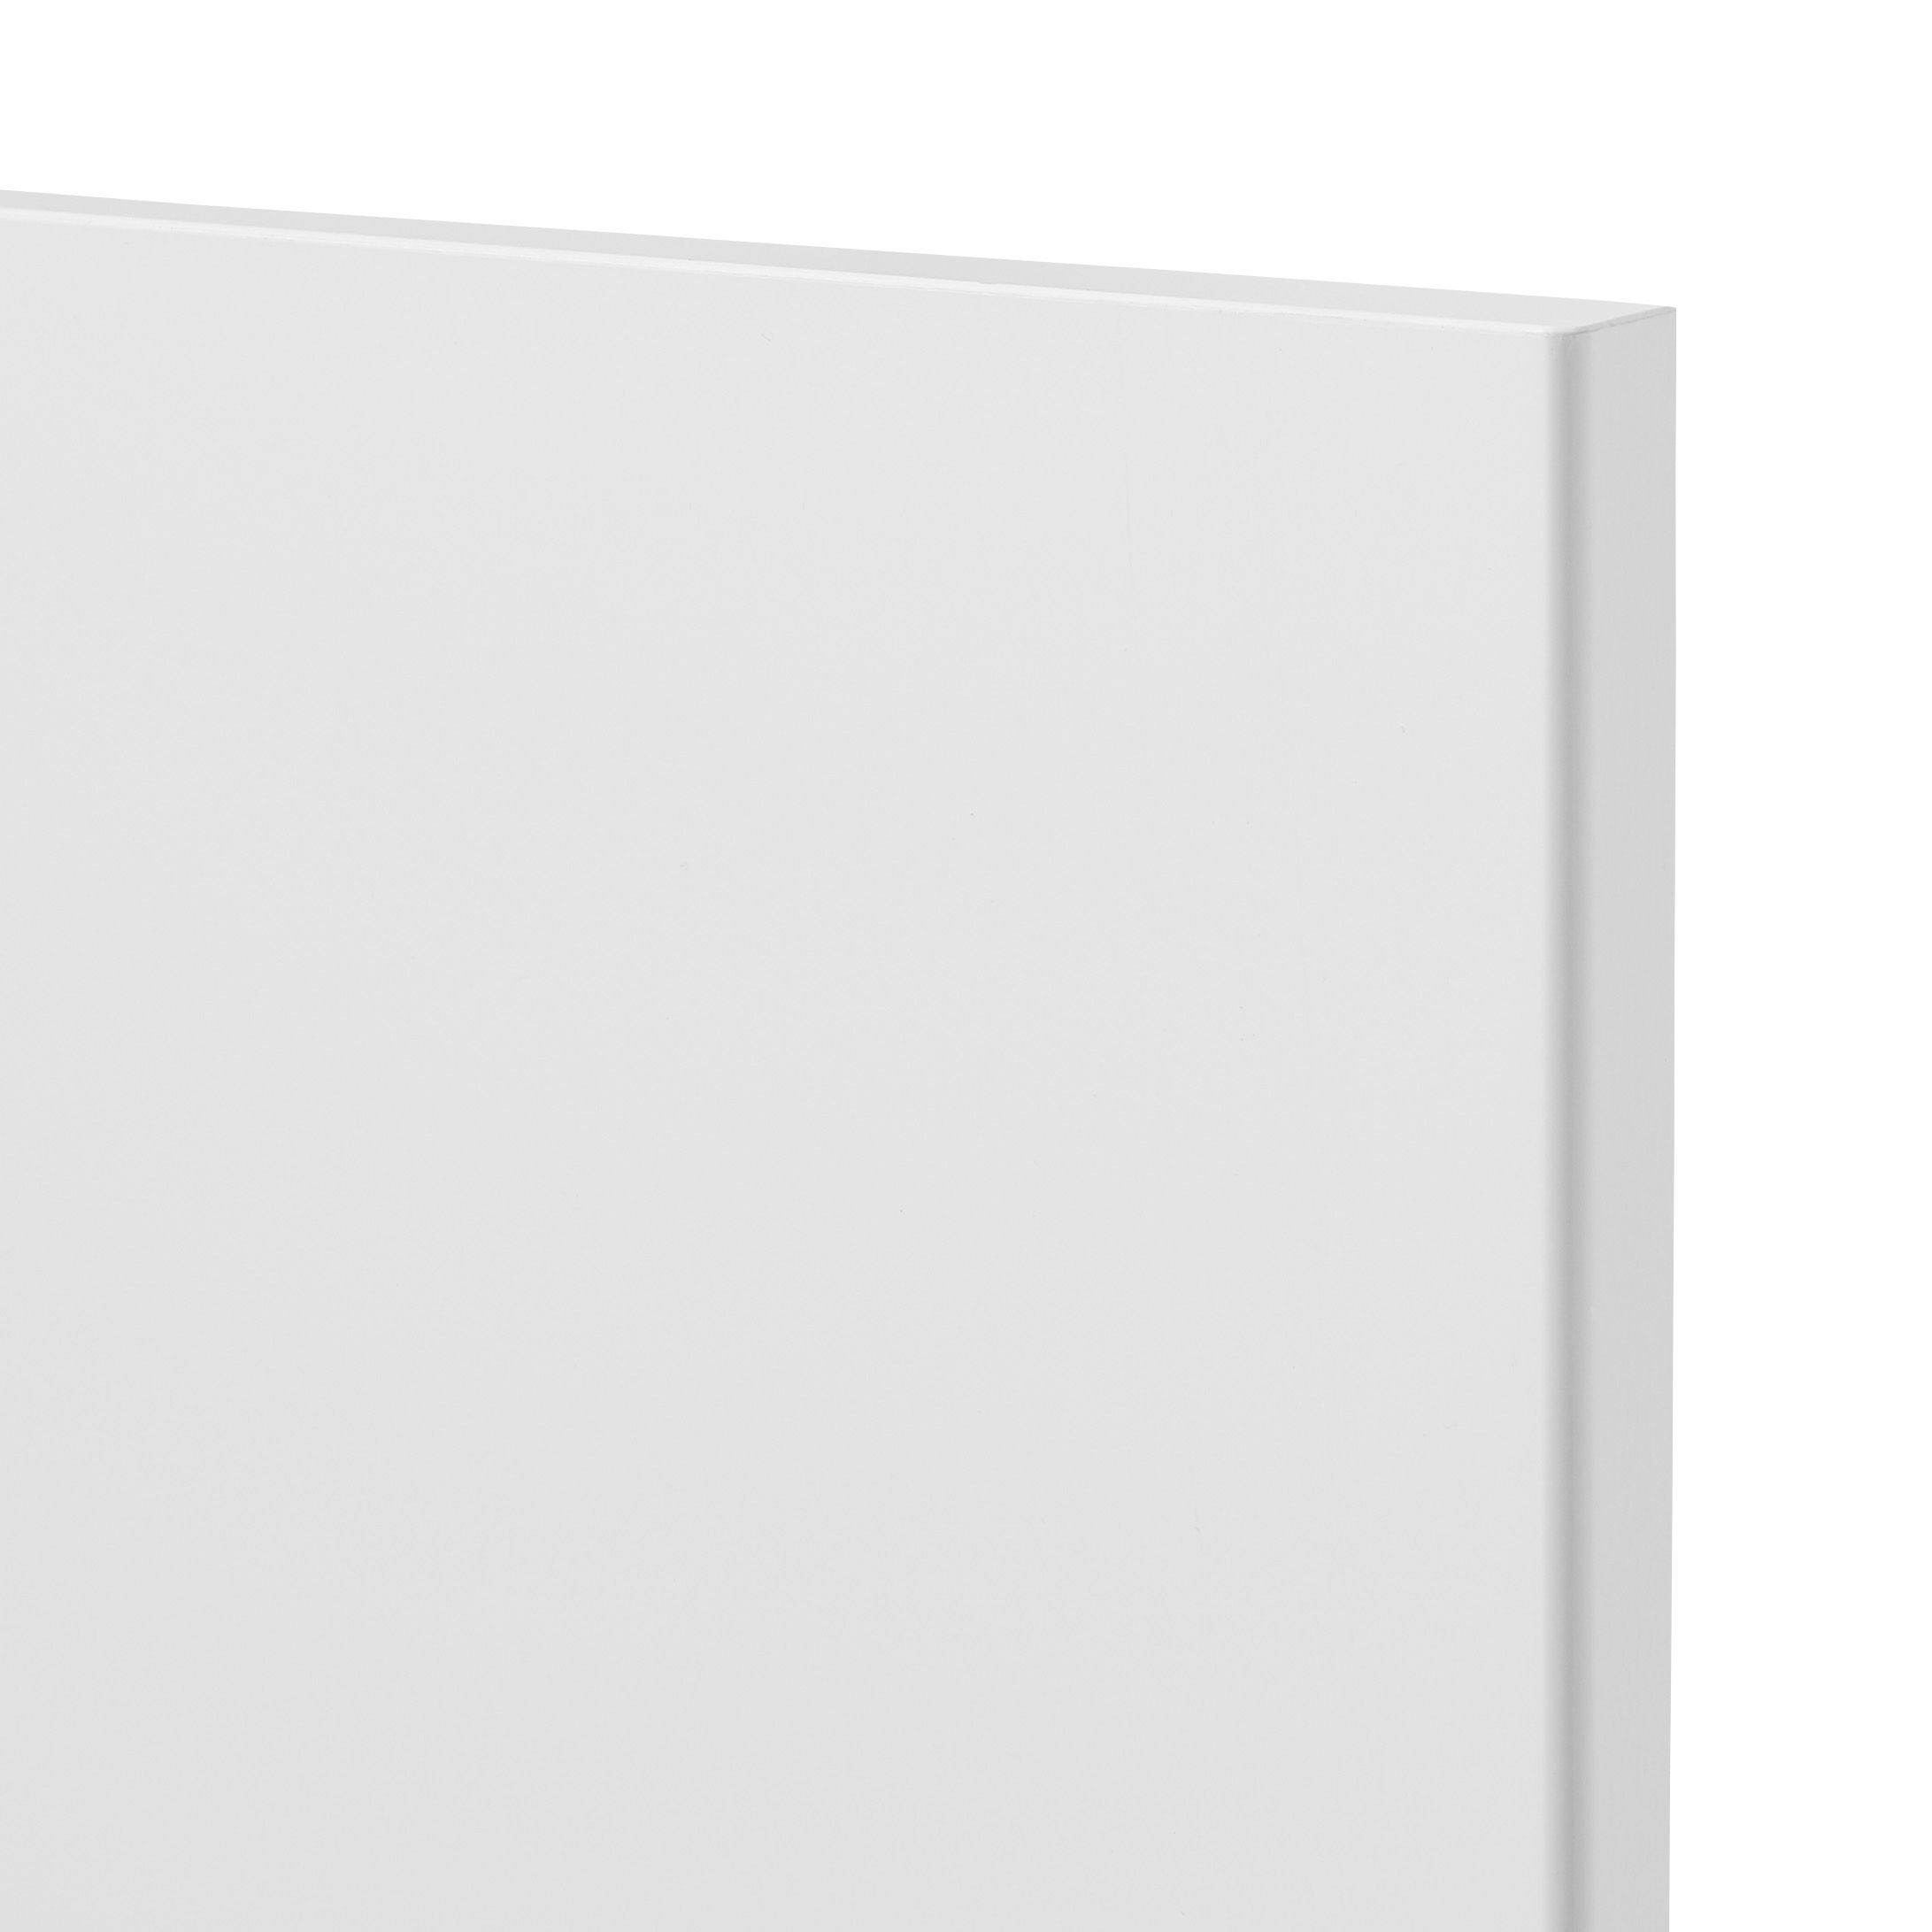 GoodHome Stevia Gloss white slab Drawer front, bridging door & bi fold door, (W)800mm (H)356mm (T)18mm